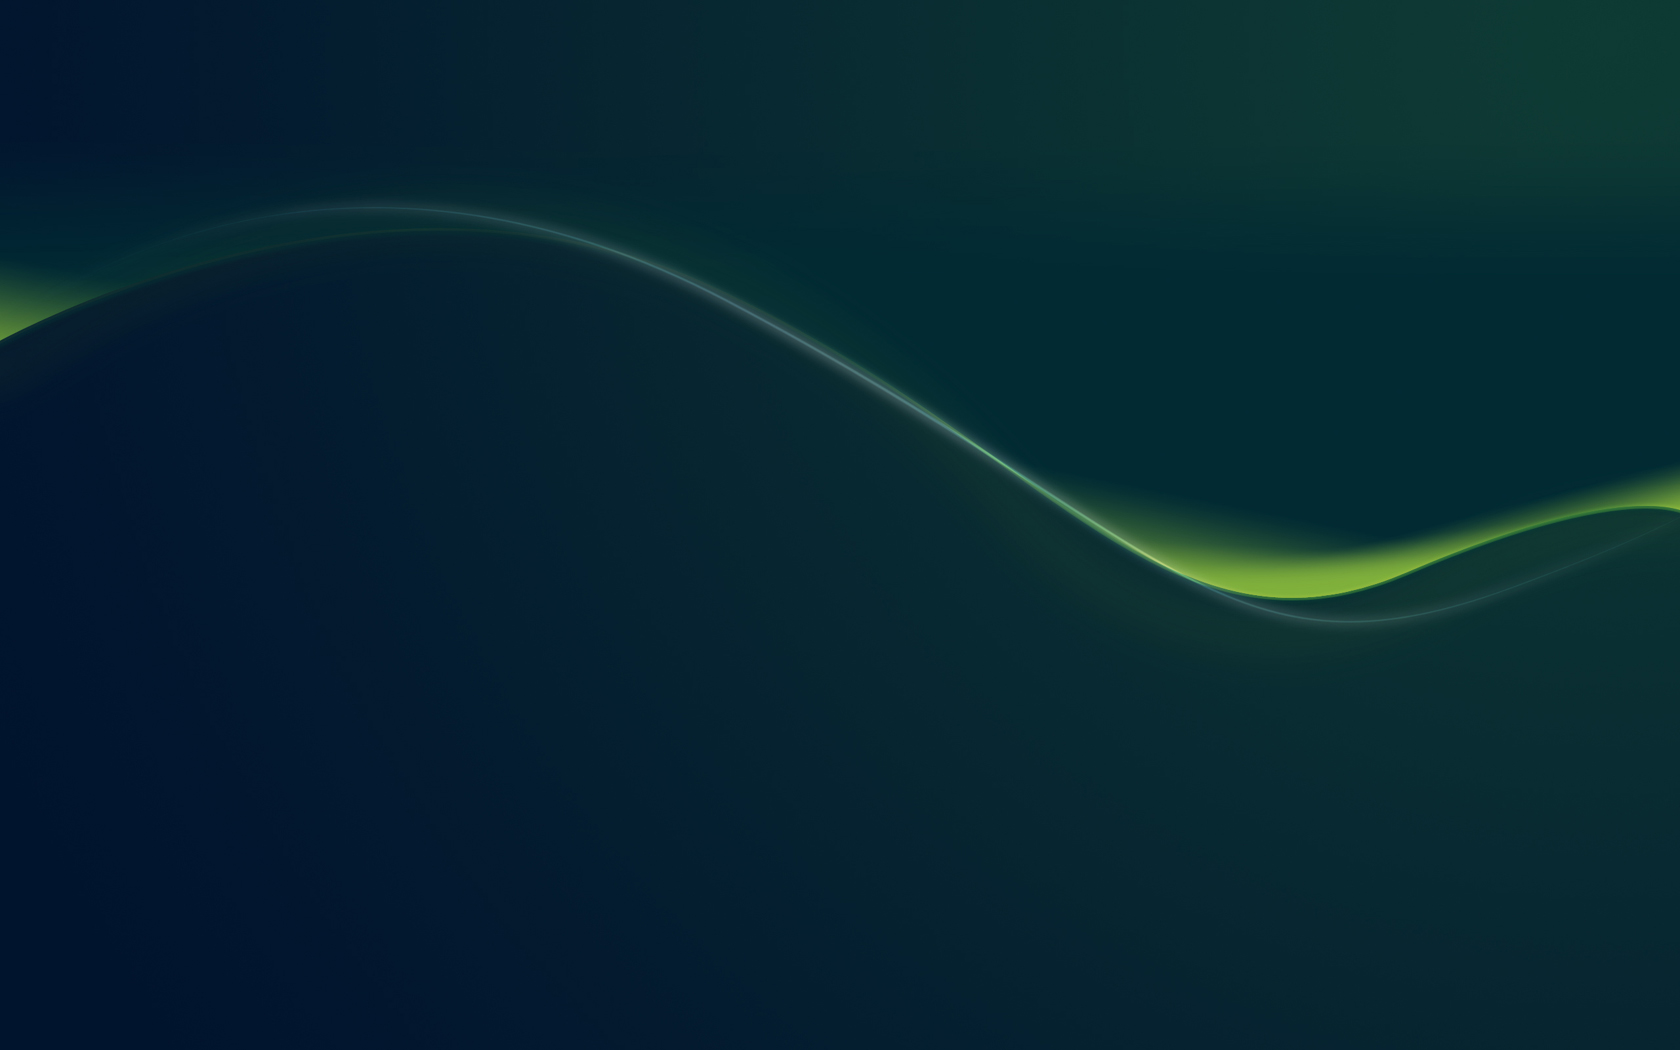 Vibrant green desktop wallpaper